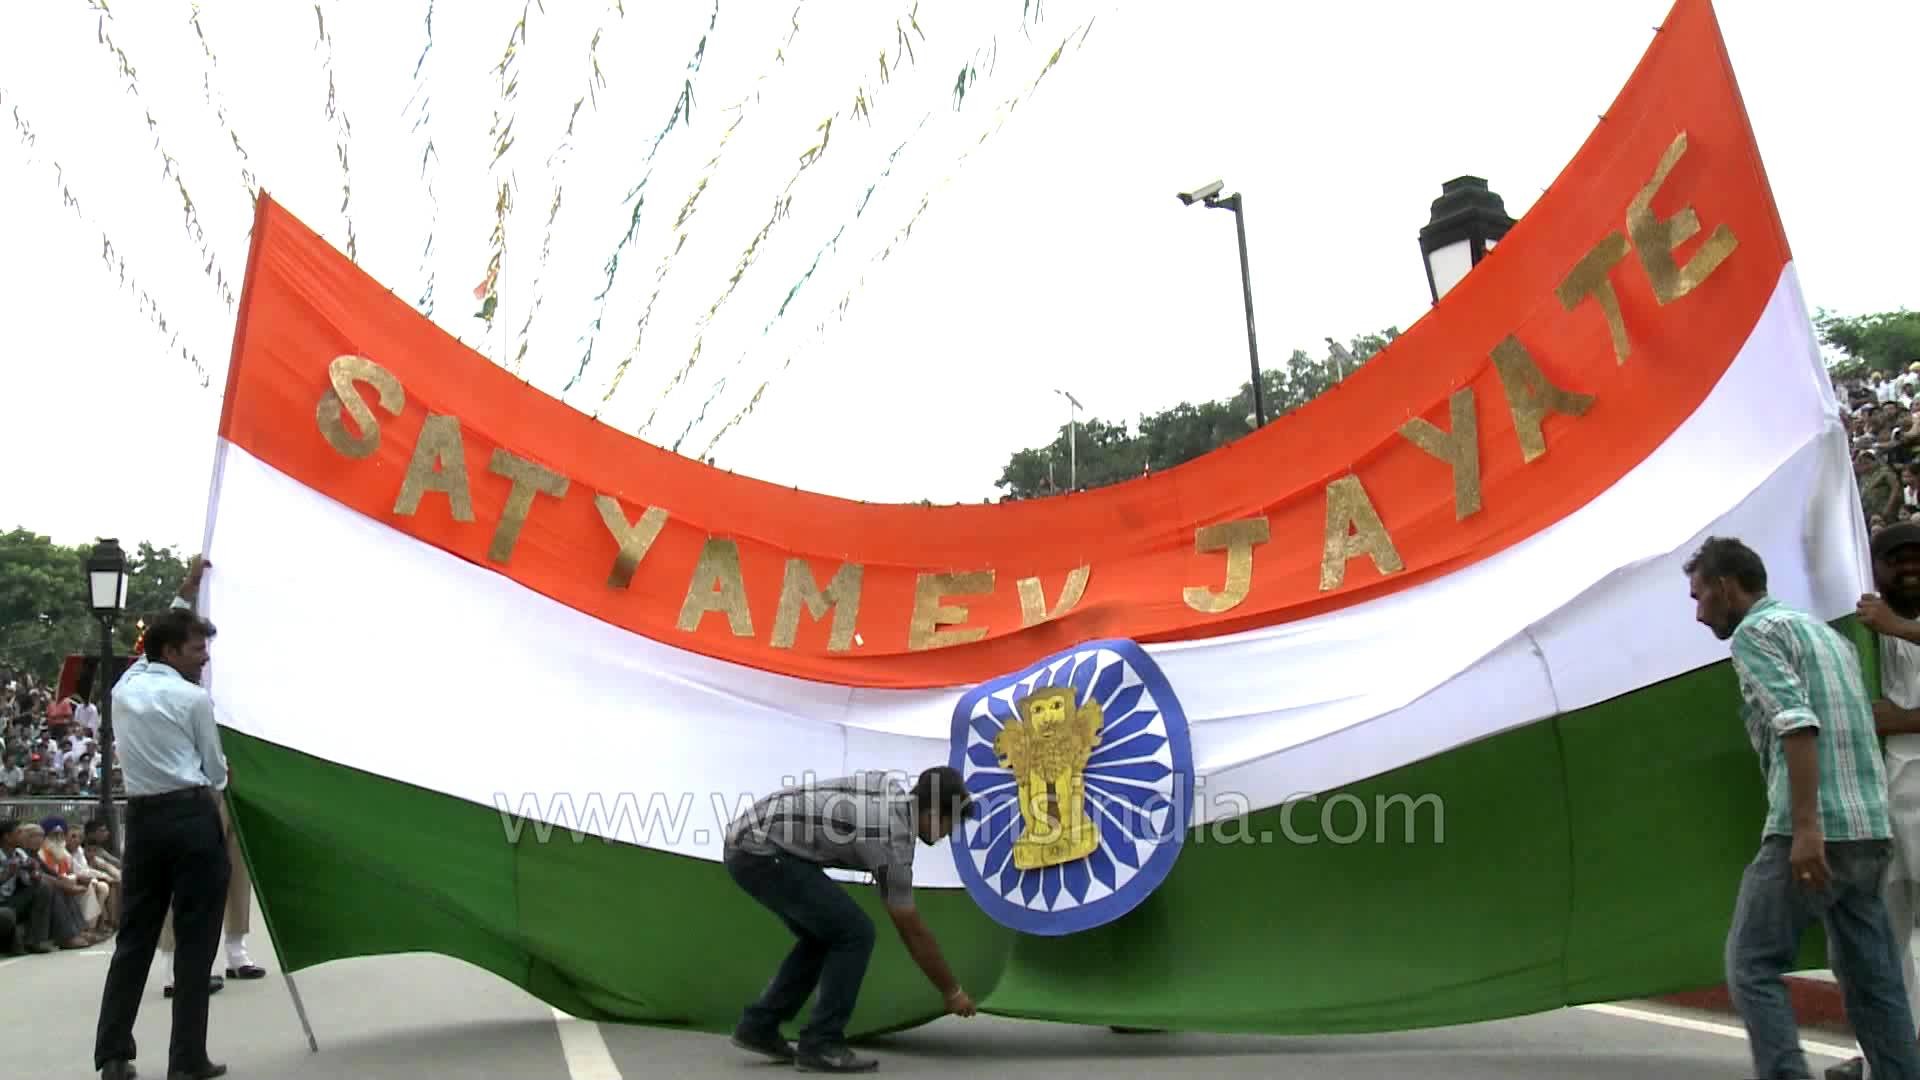 1920x1080 Satyamev Jayate slogan in Indian flag, Wagah border